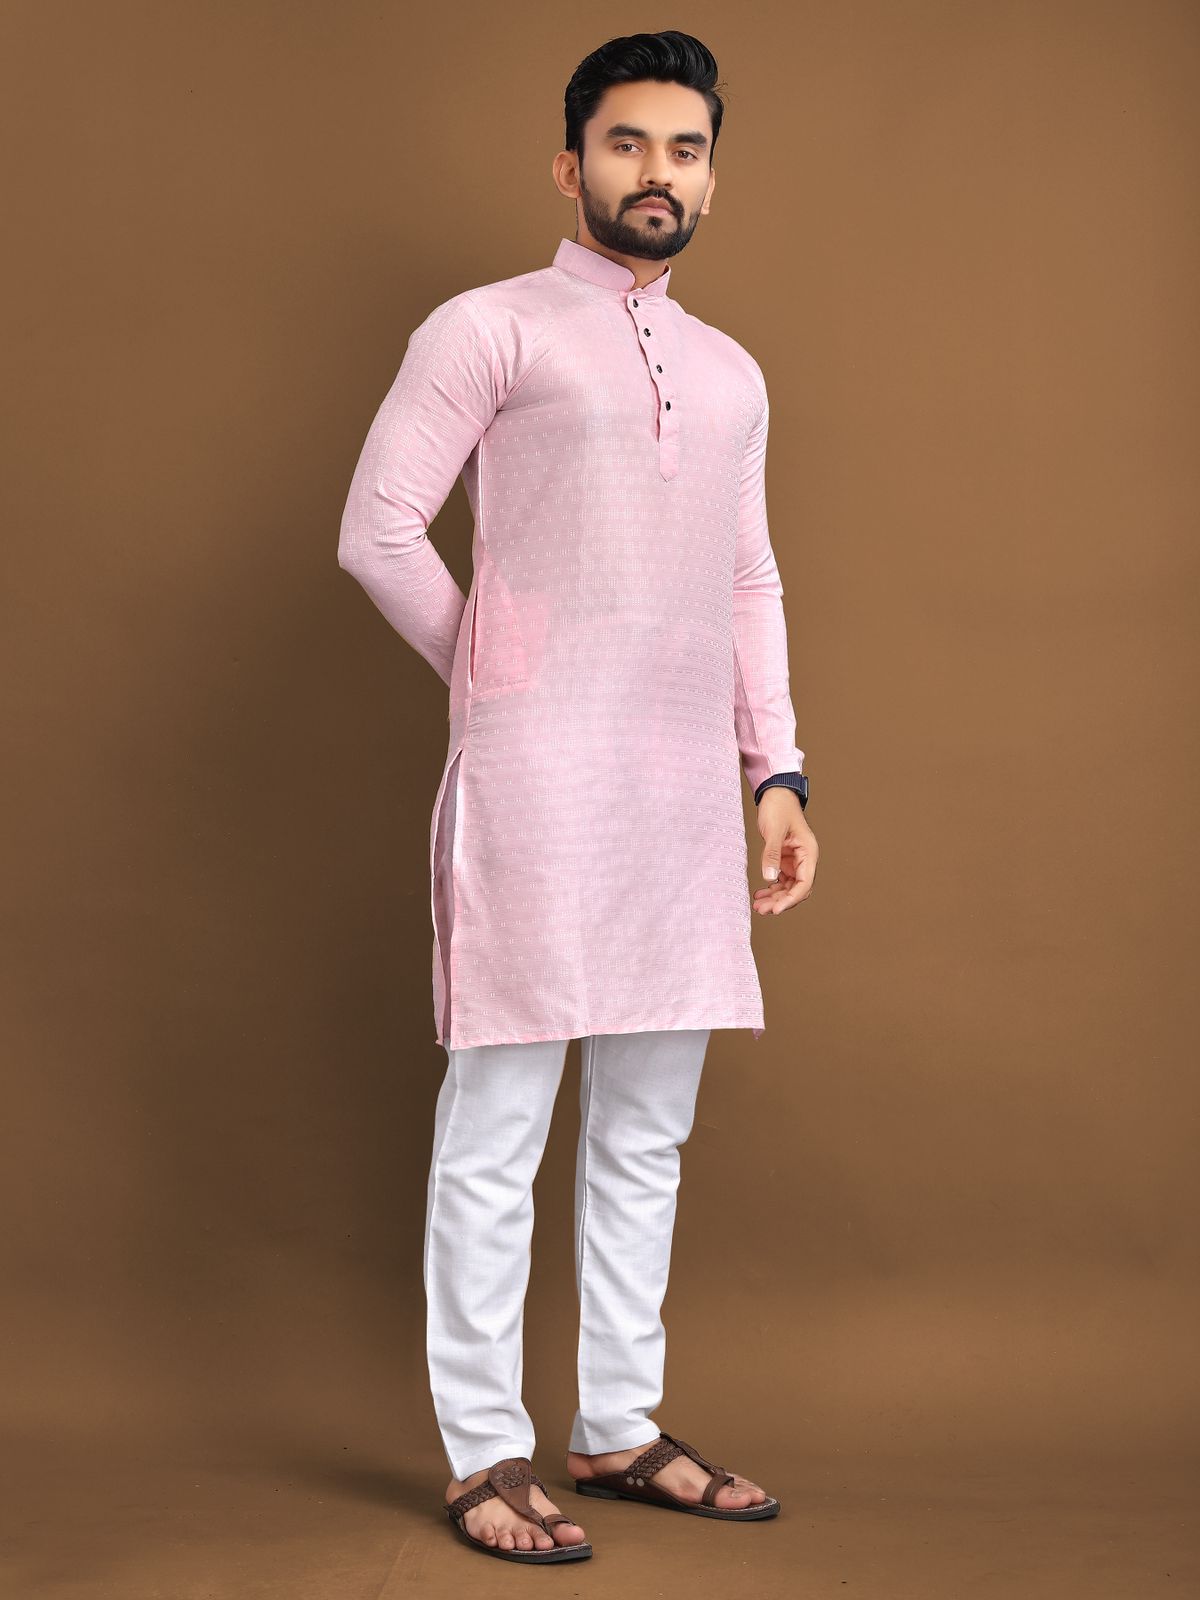 Men's Ethnic Wear Baby pink Kurta Pajama